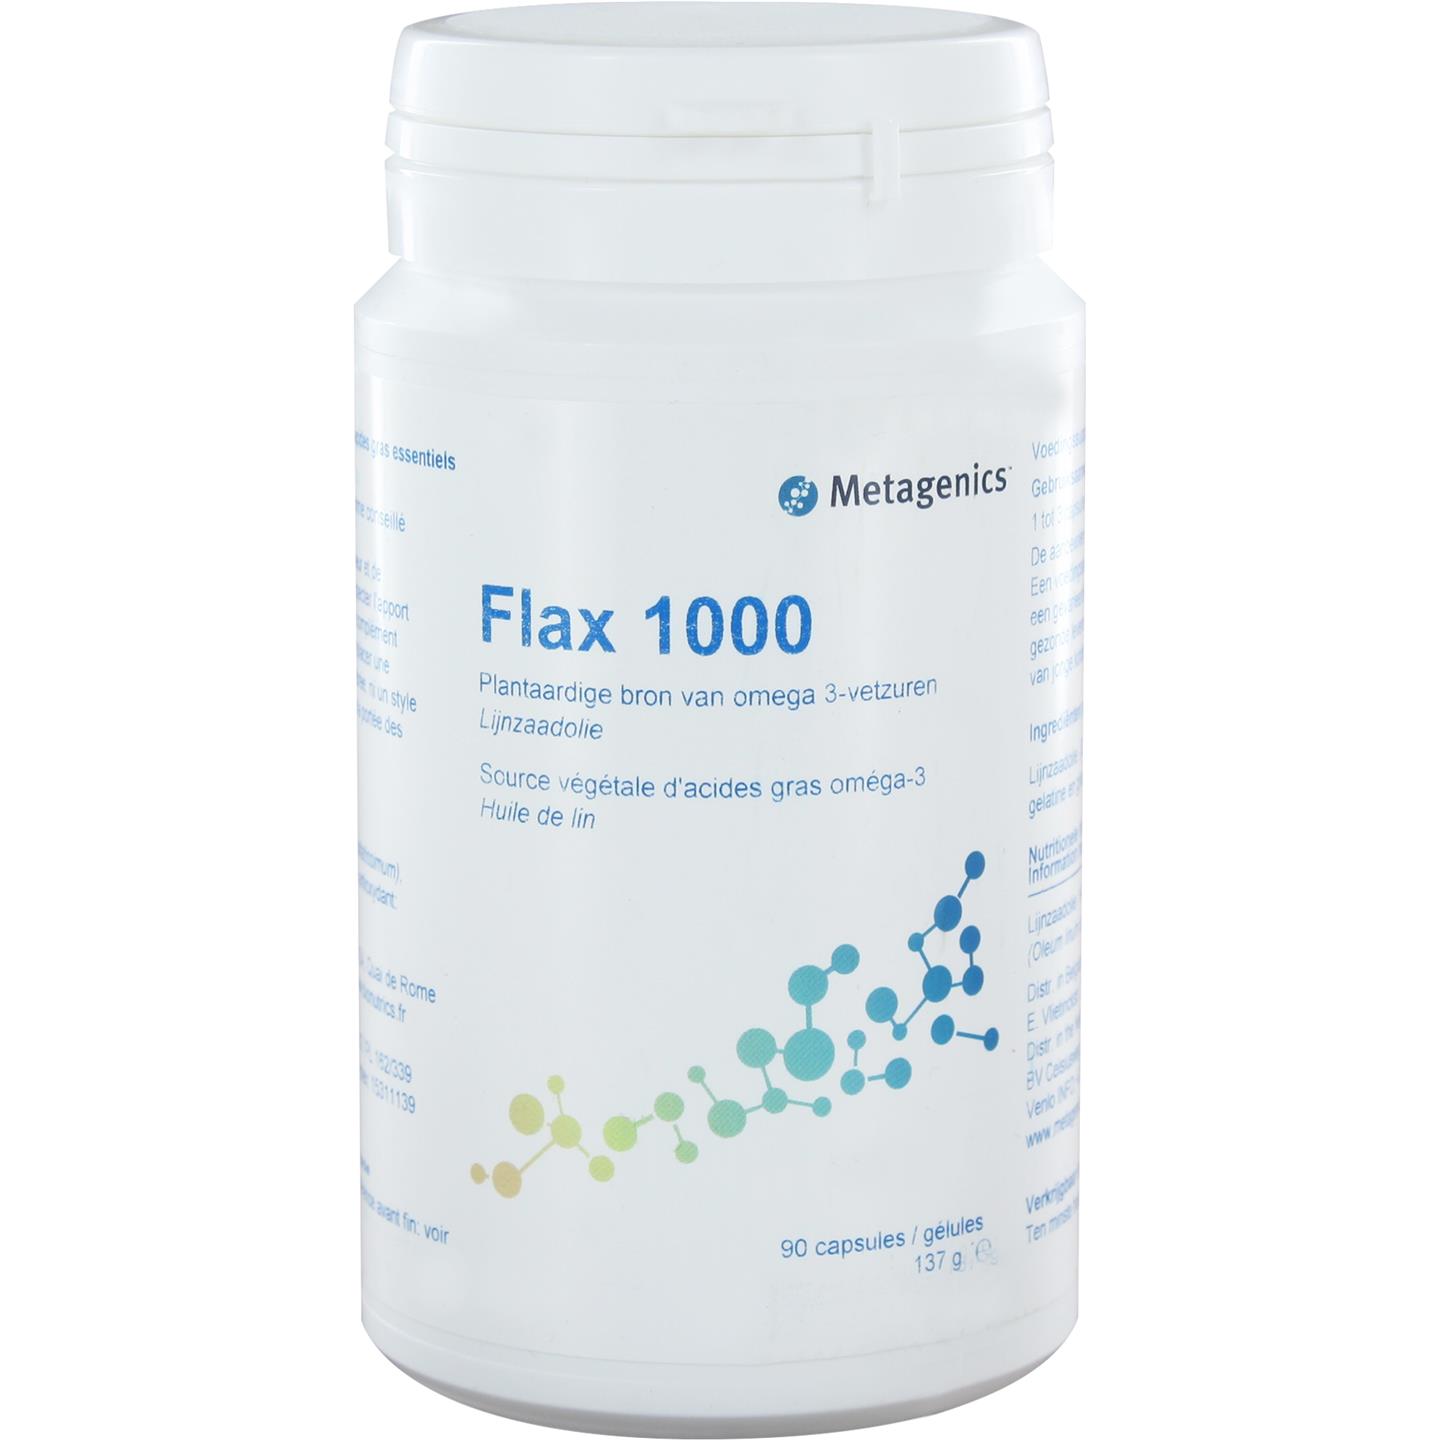 Flax 1000